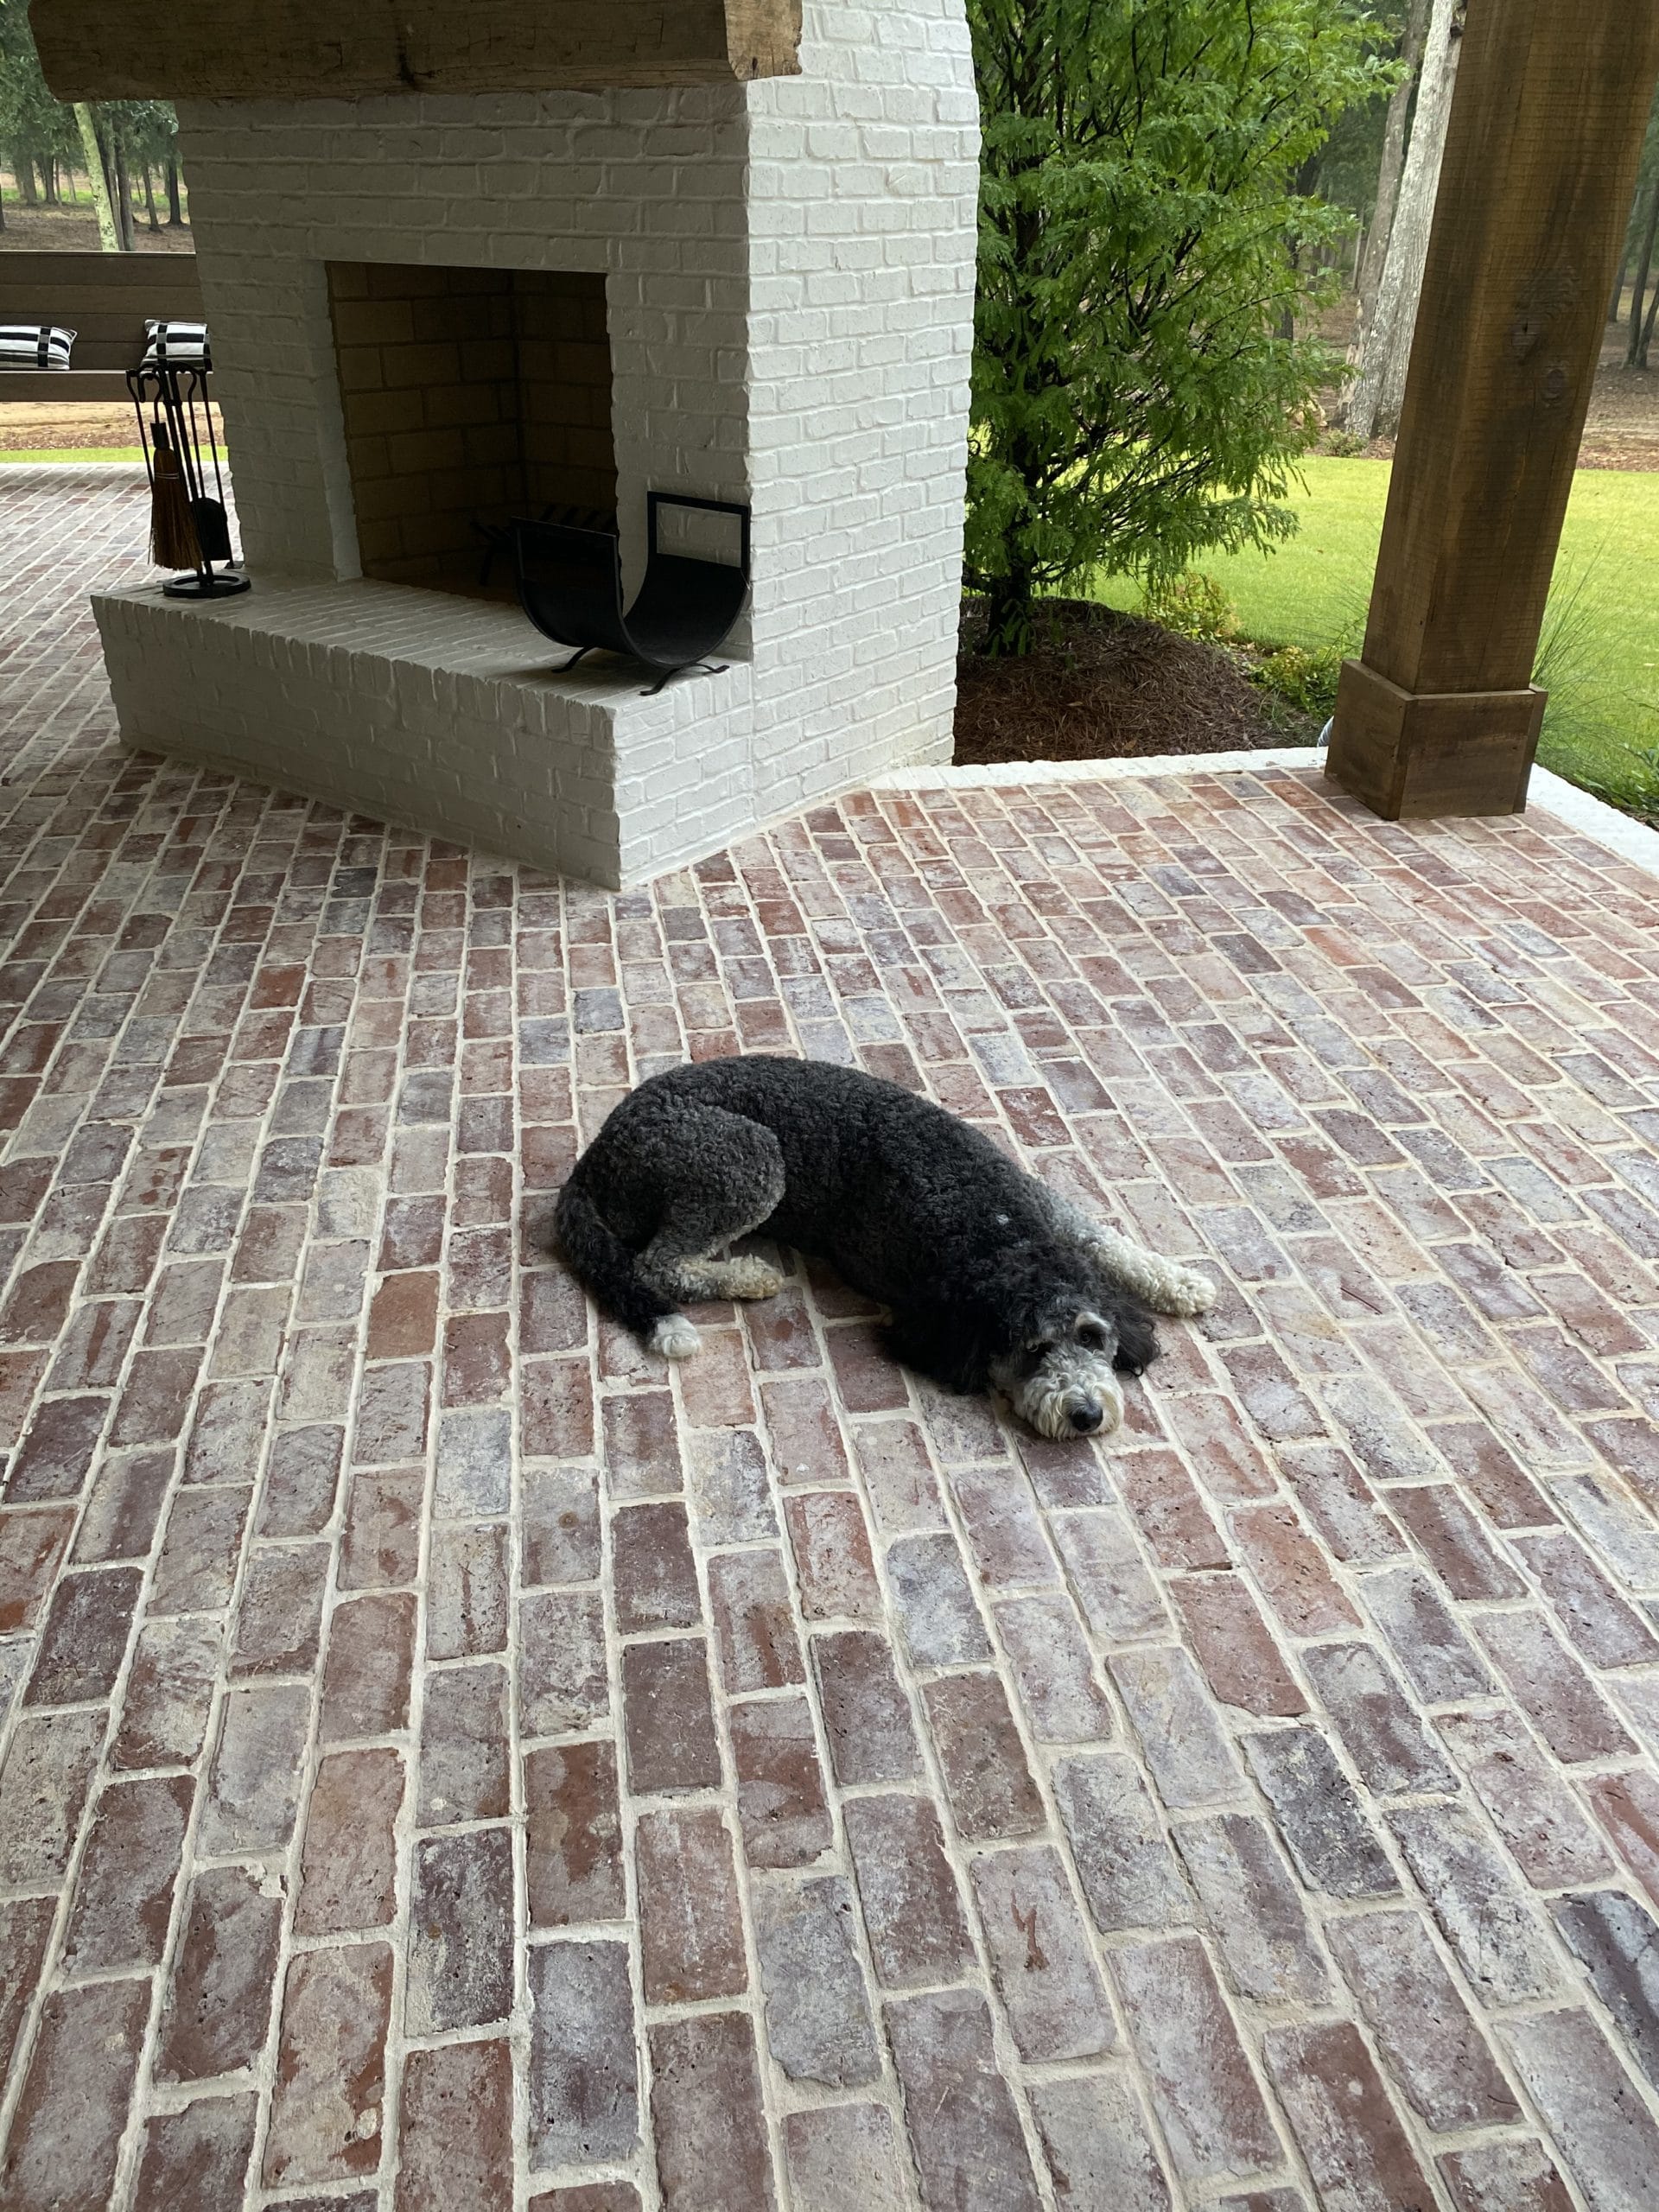 Brick patio with dog